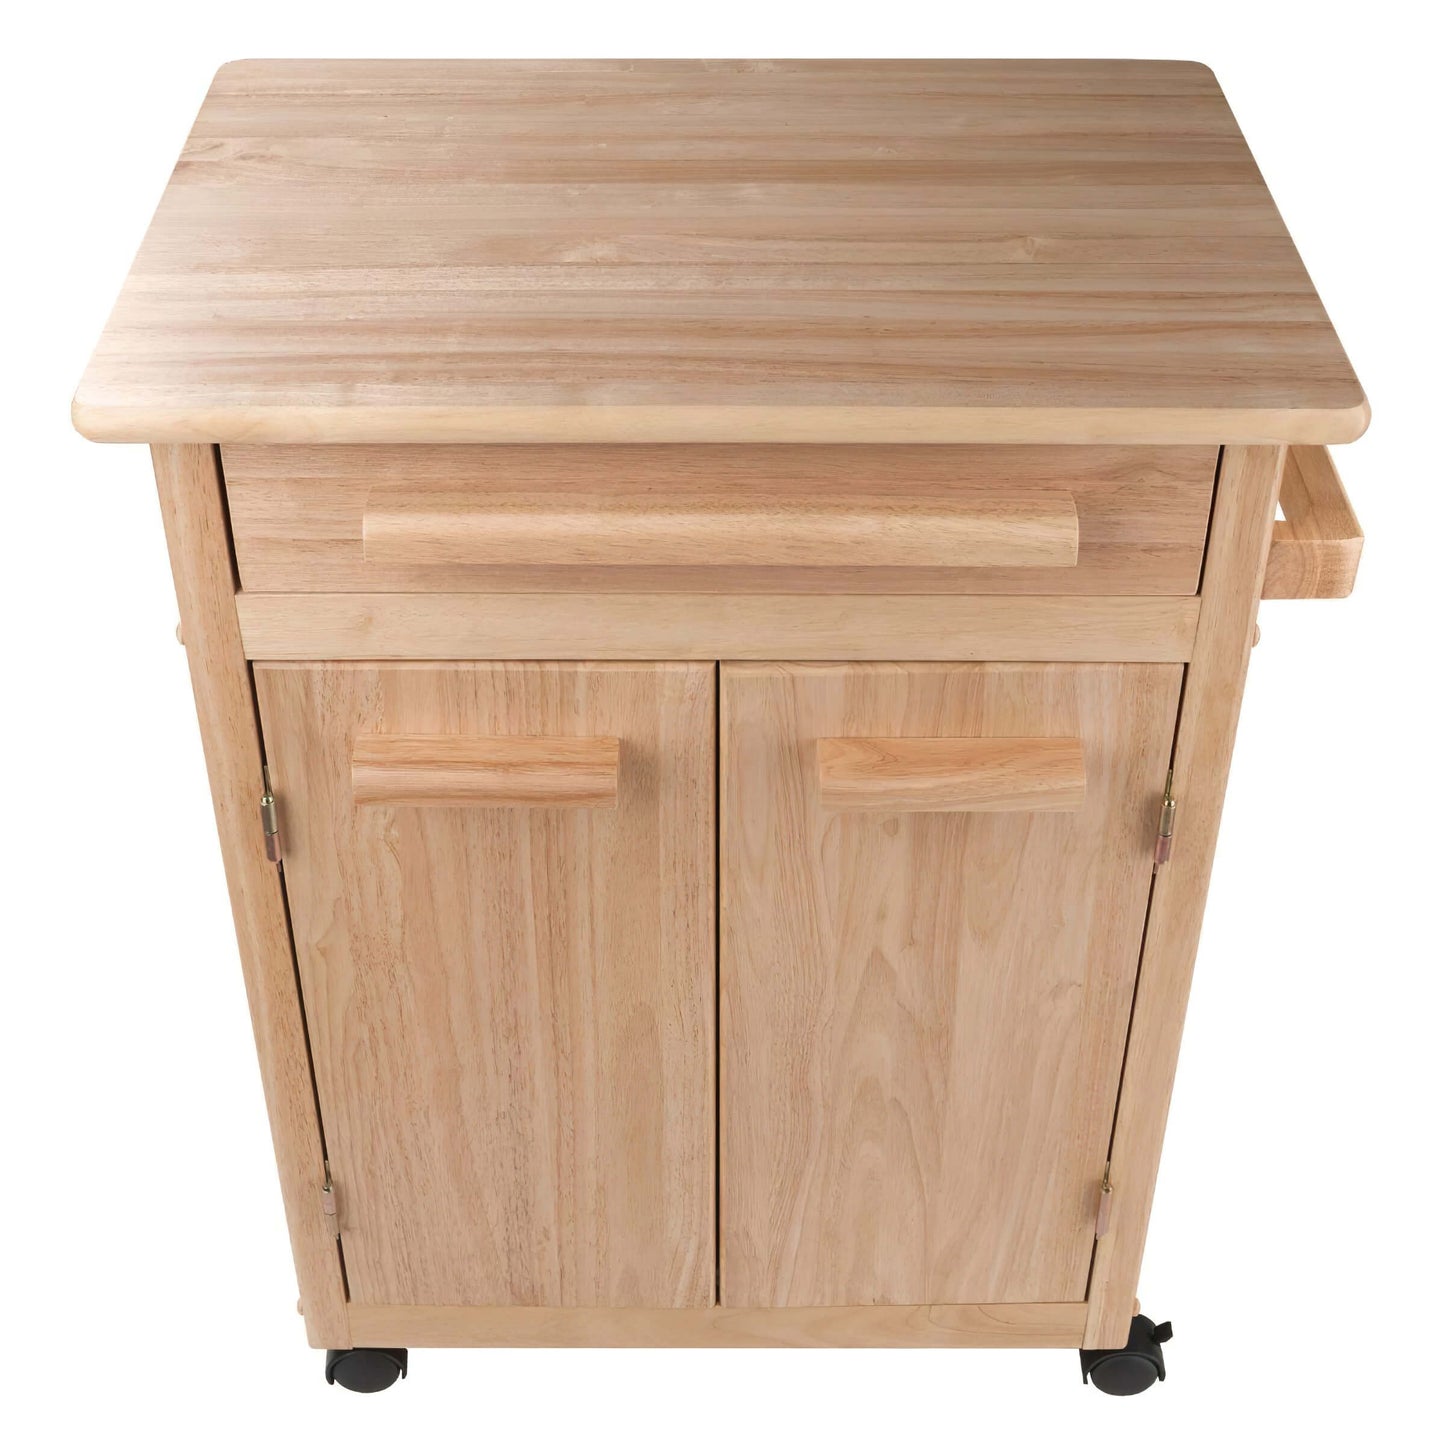 WETA® Deluxe Wood Hackett Kitchen Storage Cart, Natural Finish